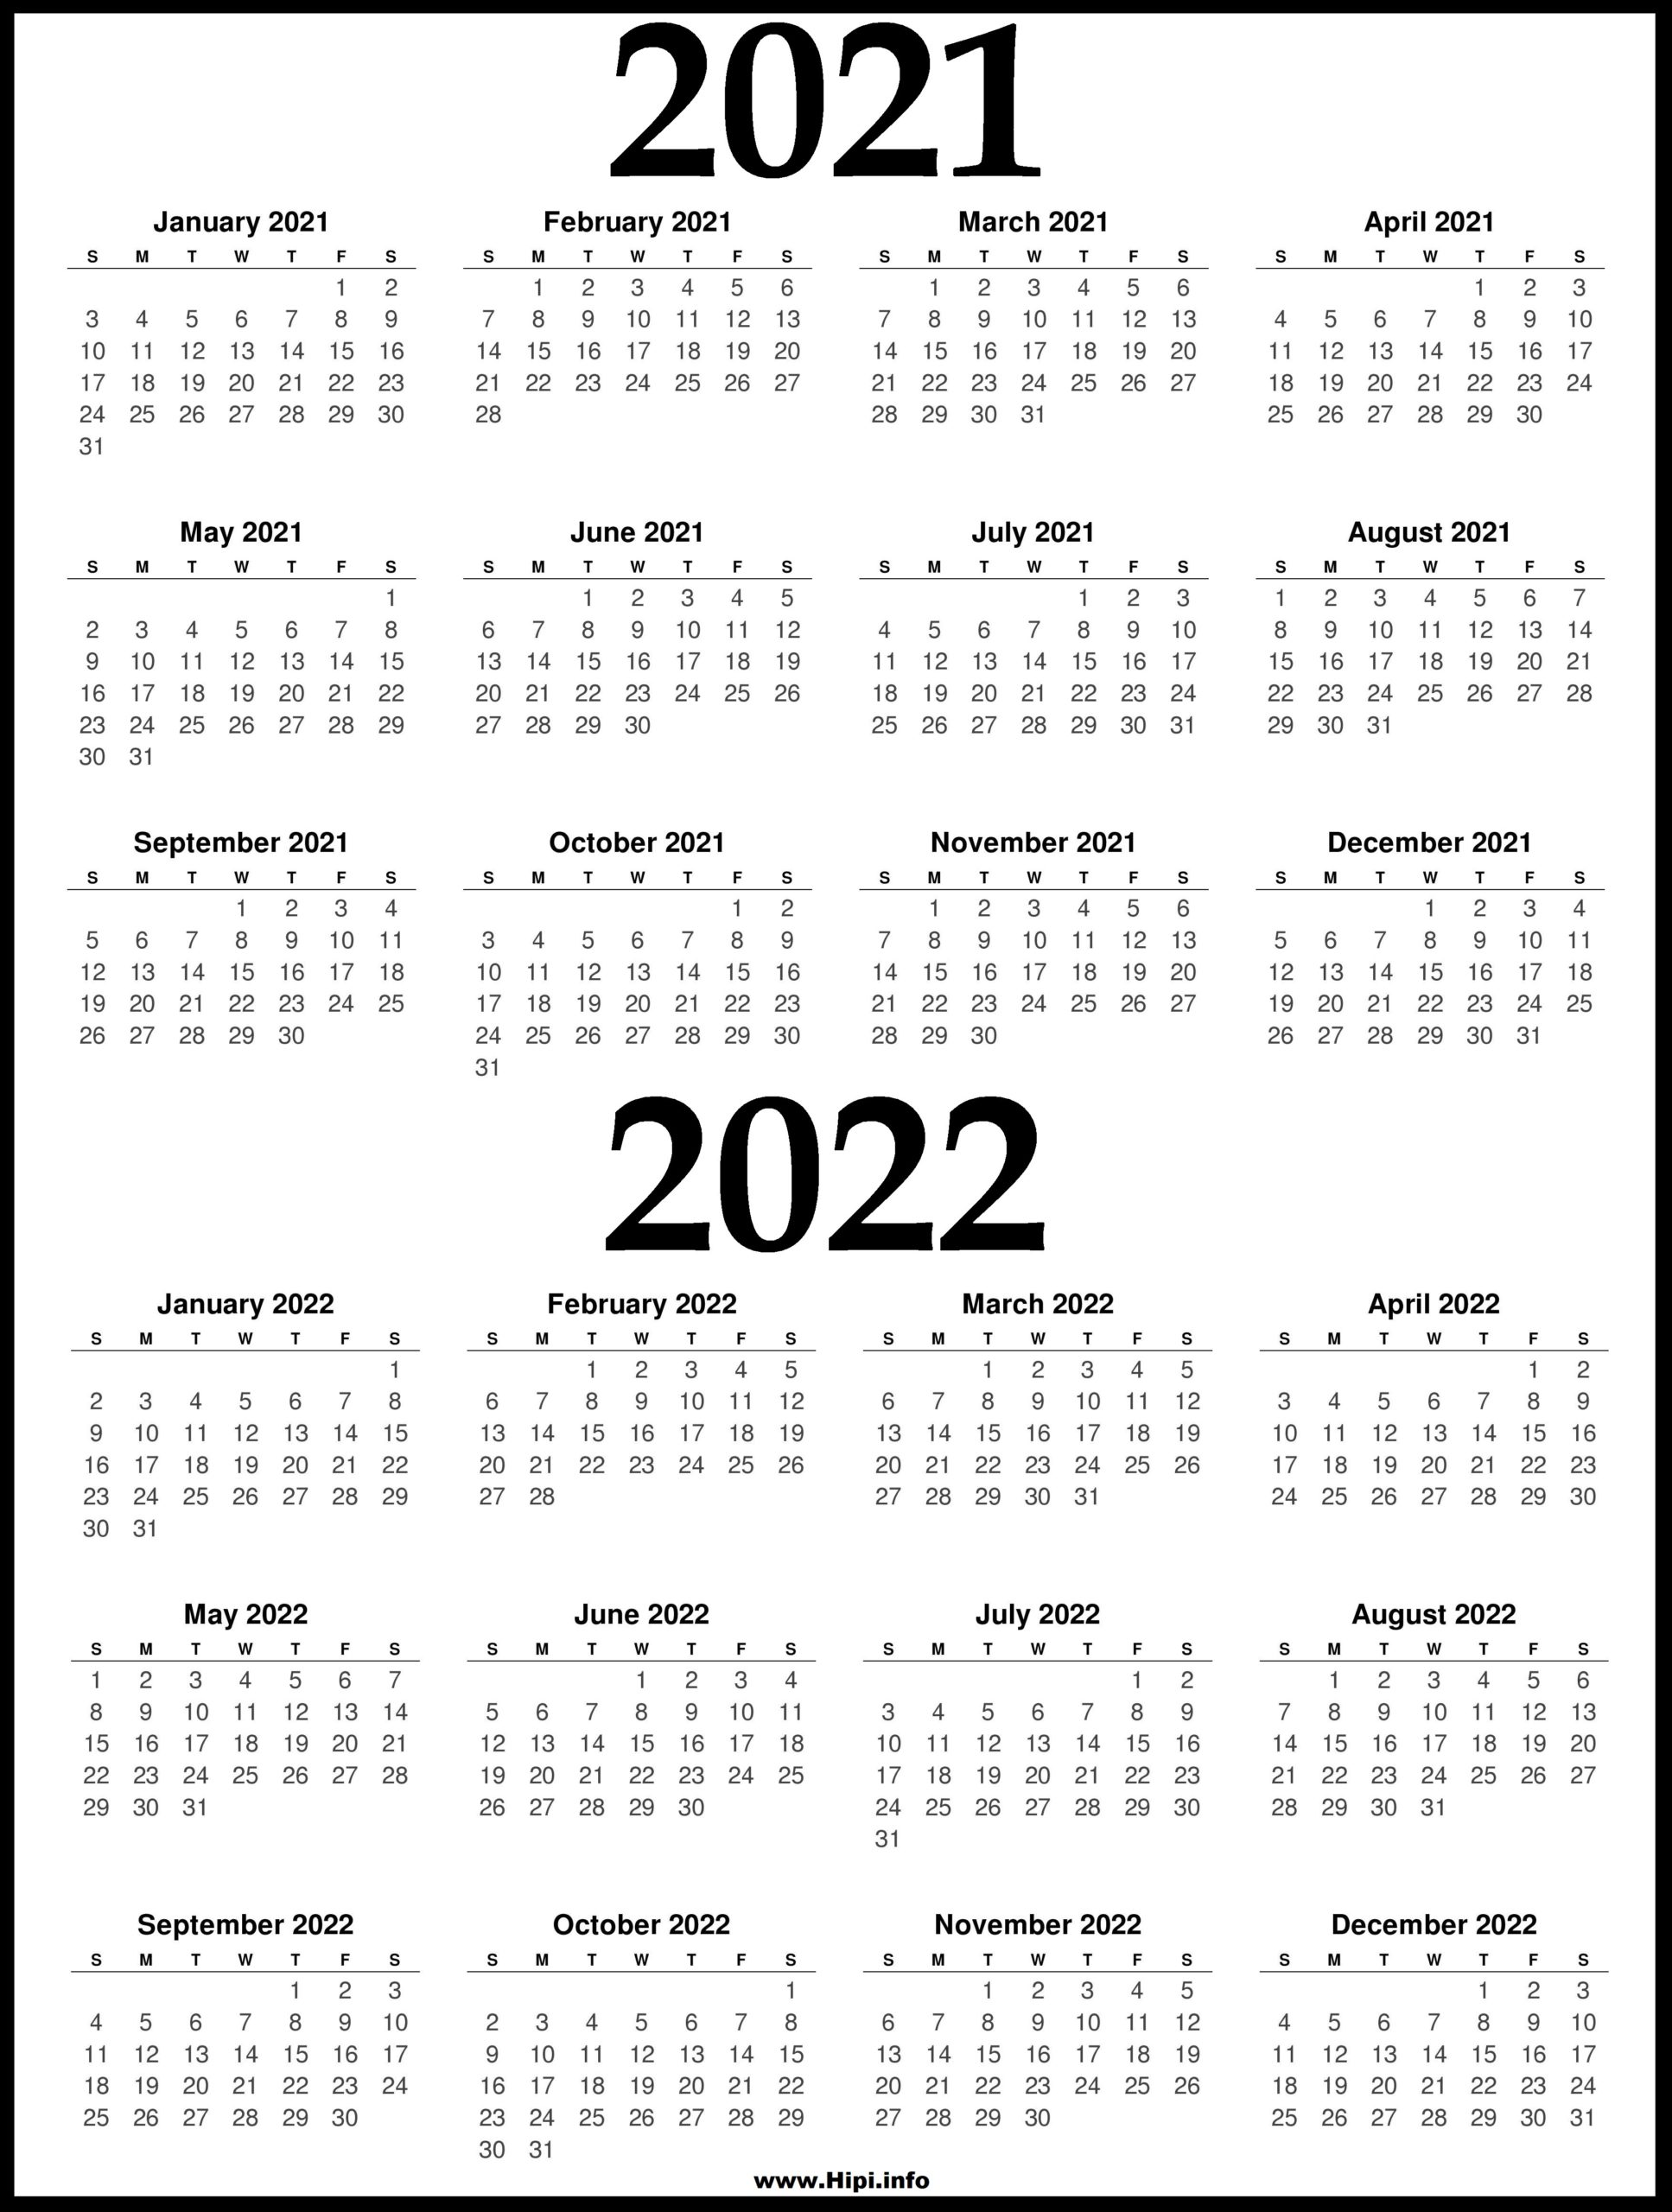 2021 Calendar 2022 Printable Pdf.2021 And 2022 Printable Calendar 2 Year Calendar Hipi Info Calendars Printable Free